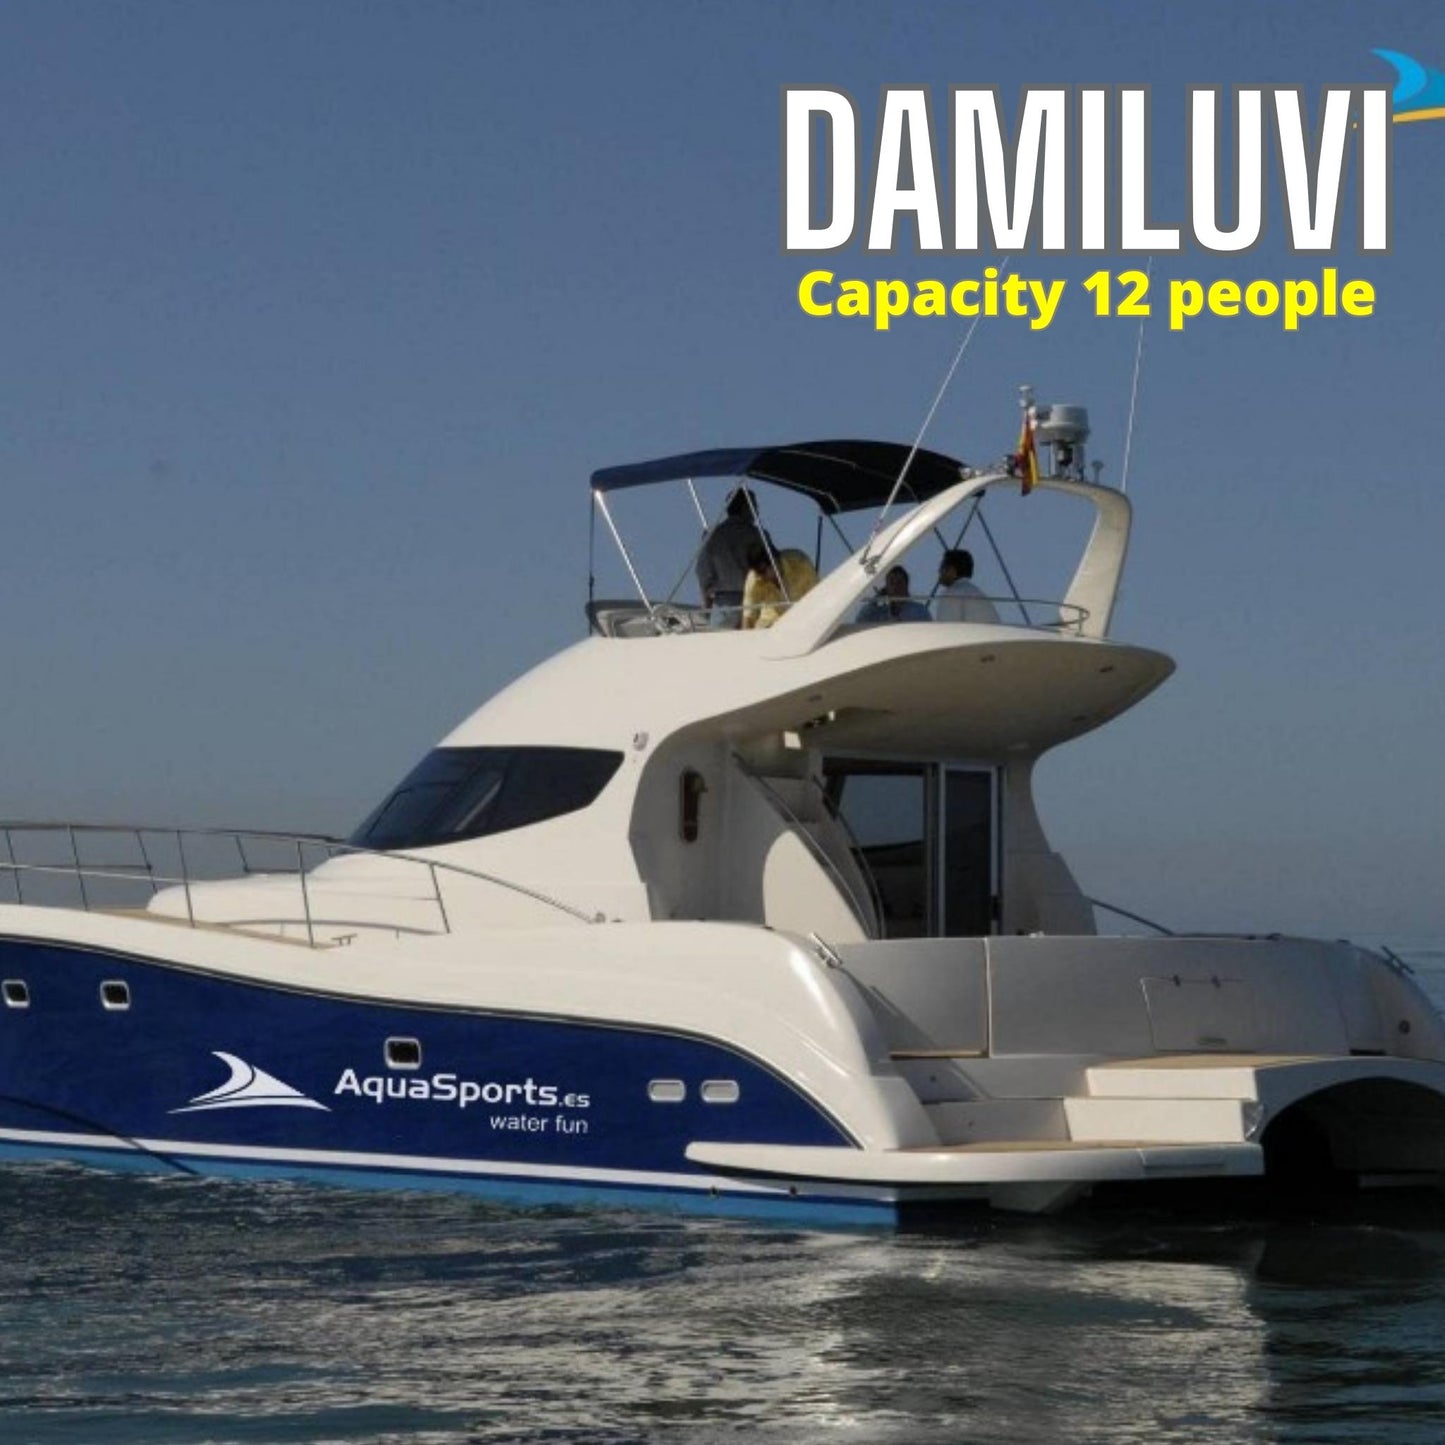 Private Yacht Rental Damiluvi (capacity 12 people)